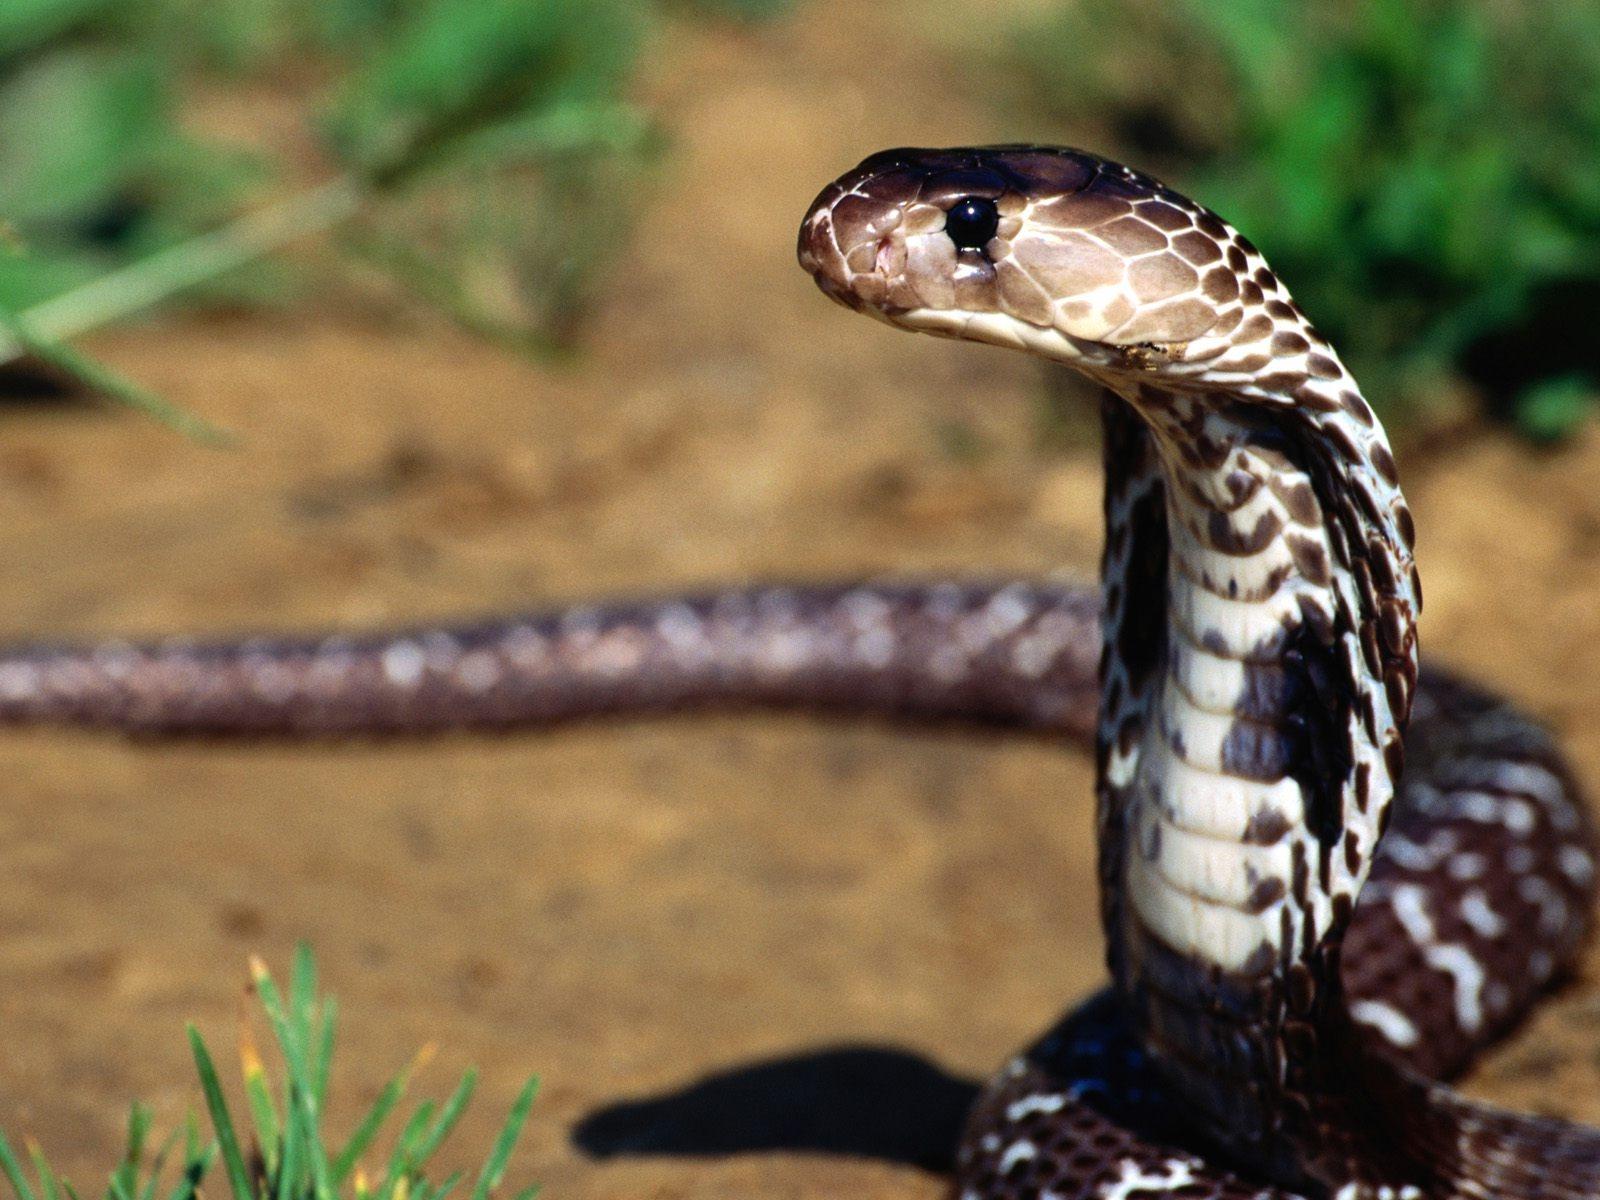 King Cobra Snake Attacking HD Wallpaper, Background Image